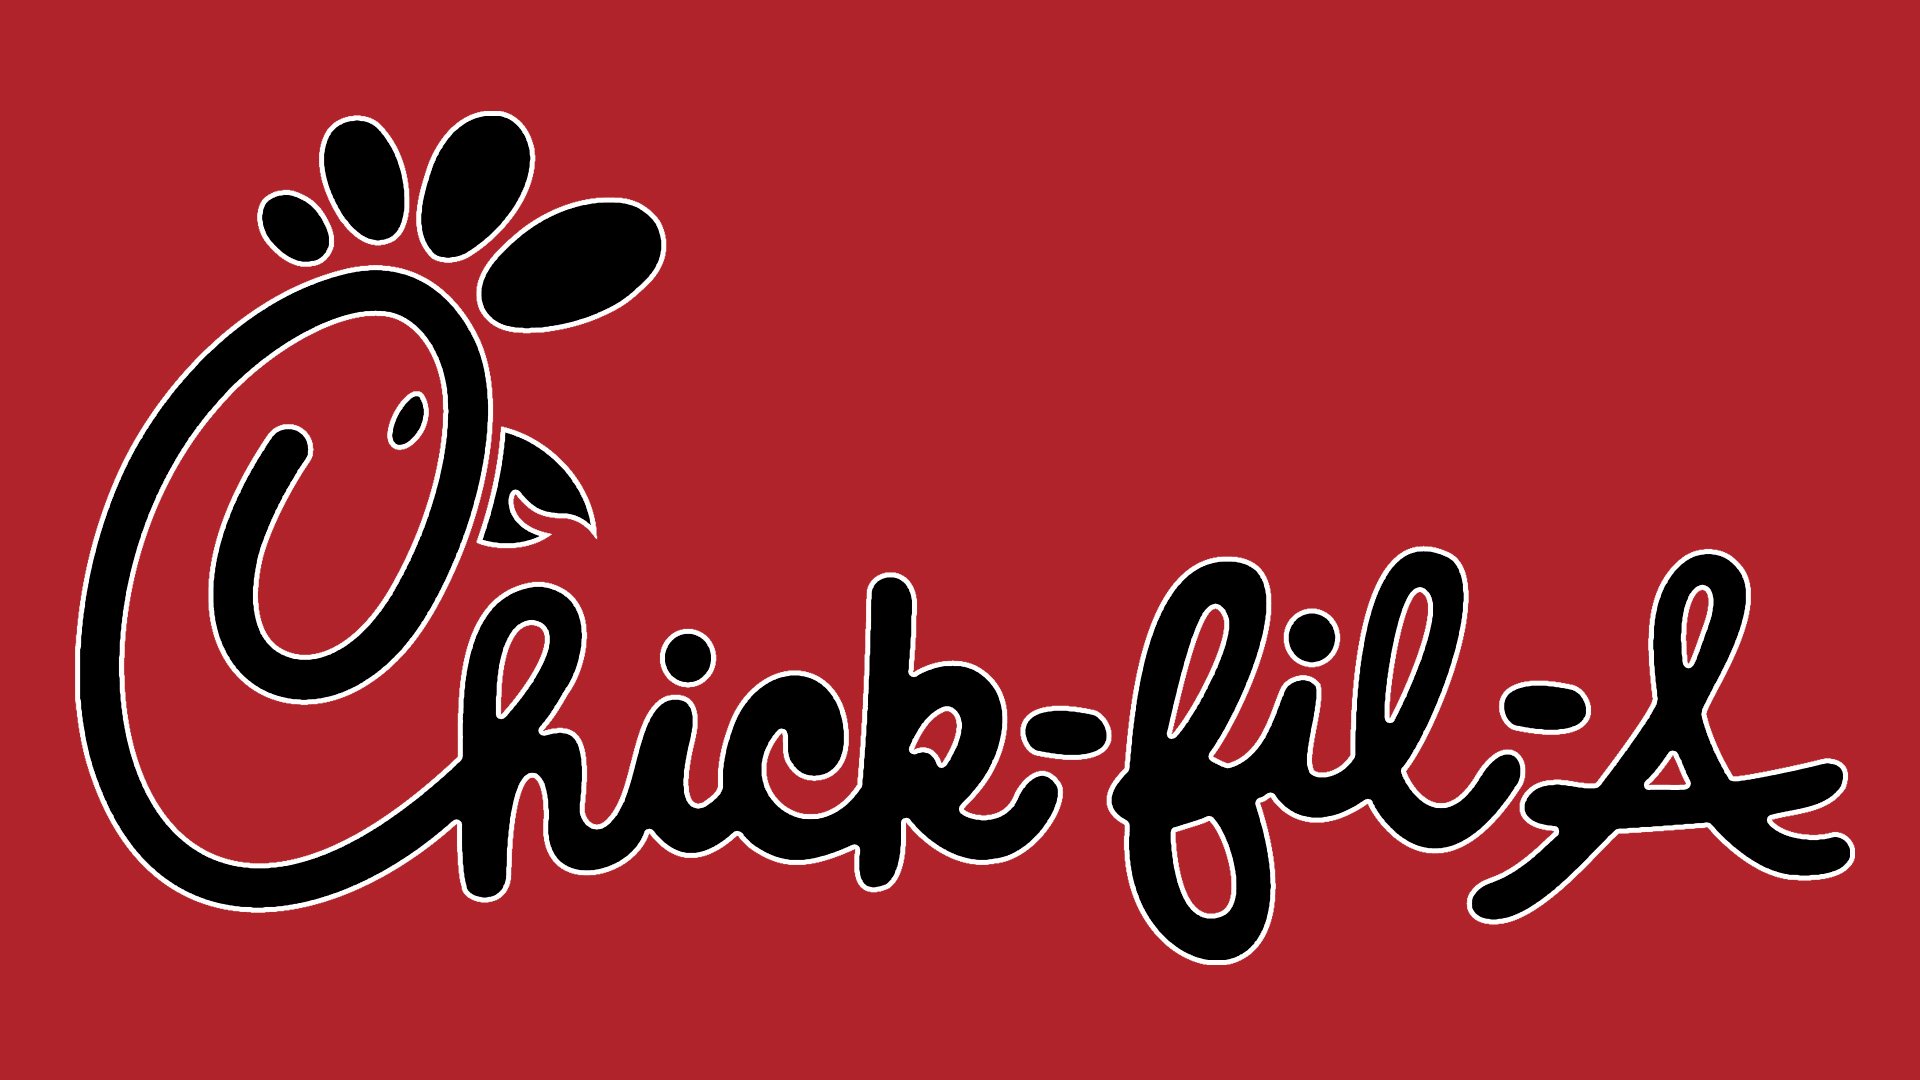 ChickfilA Logo, ChickfilA Symbol, Meaning, History and Evolution